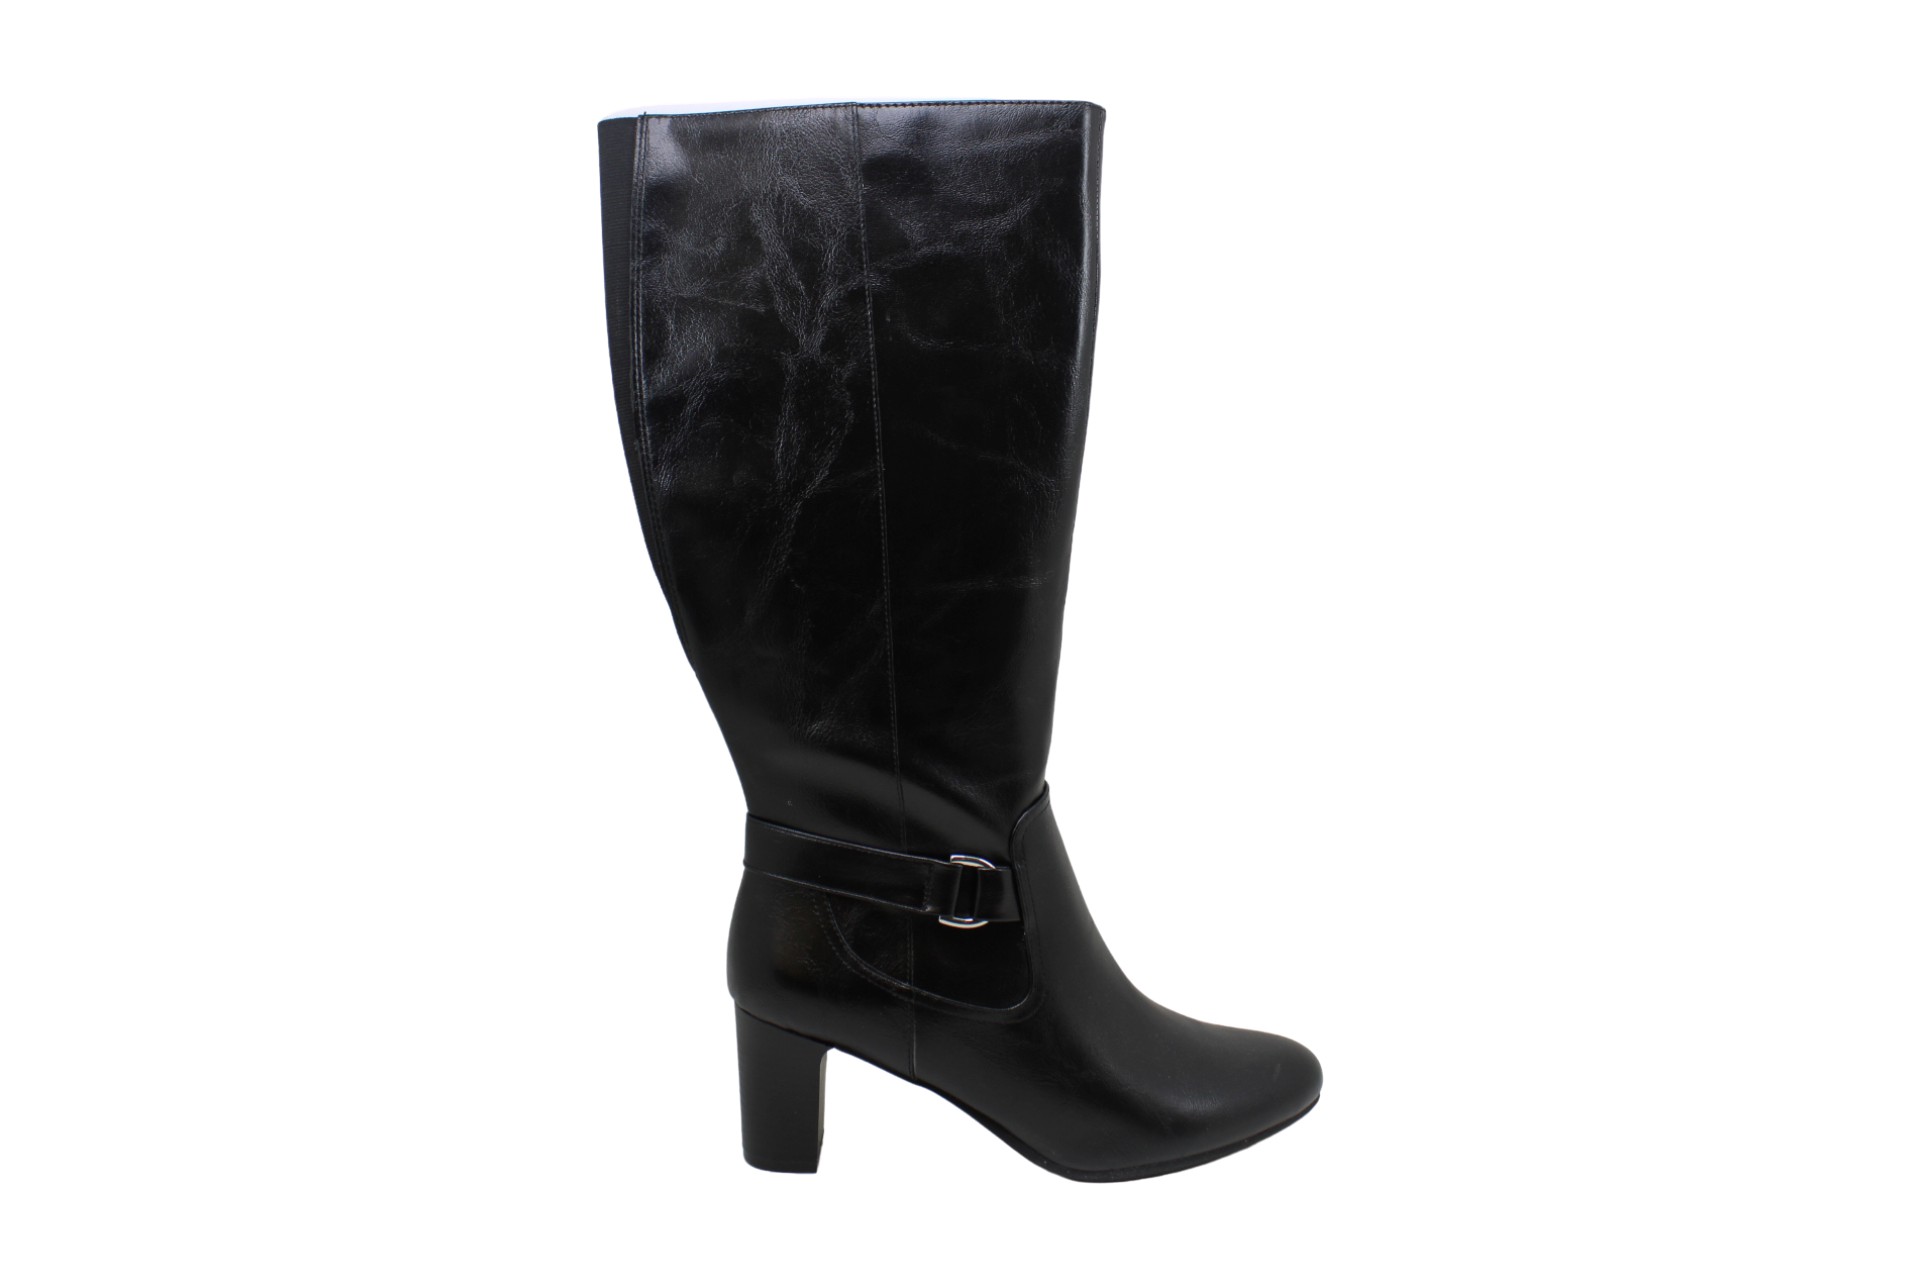 LifeStride Marta Boots, Black, Size 6.0 | eBay